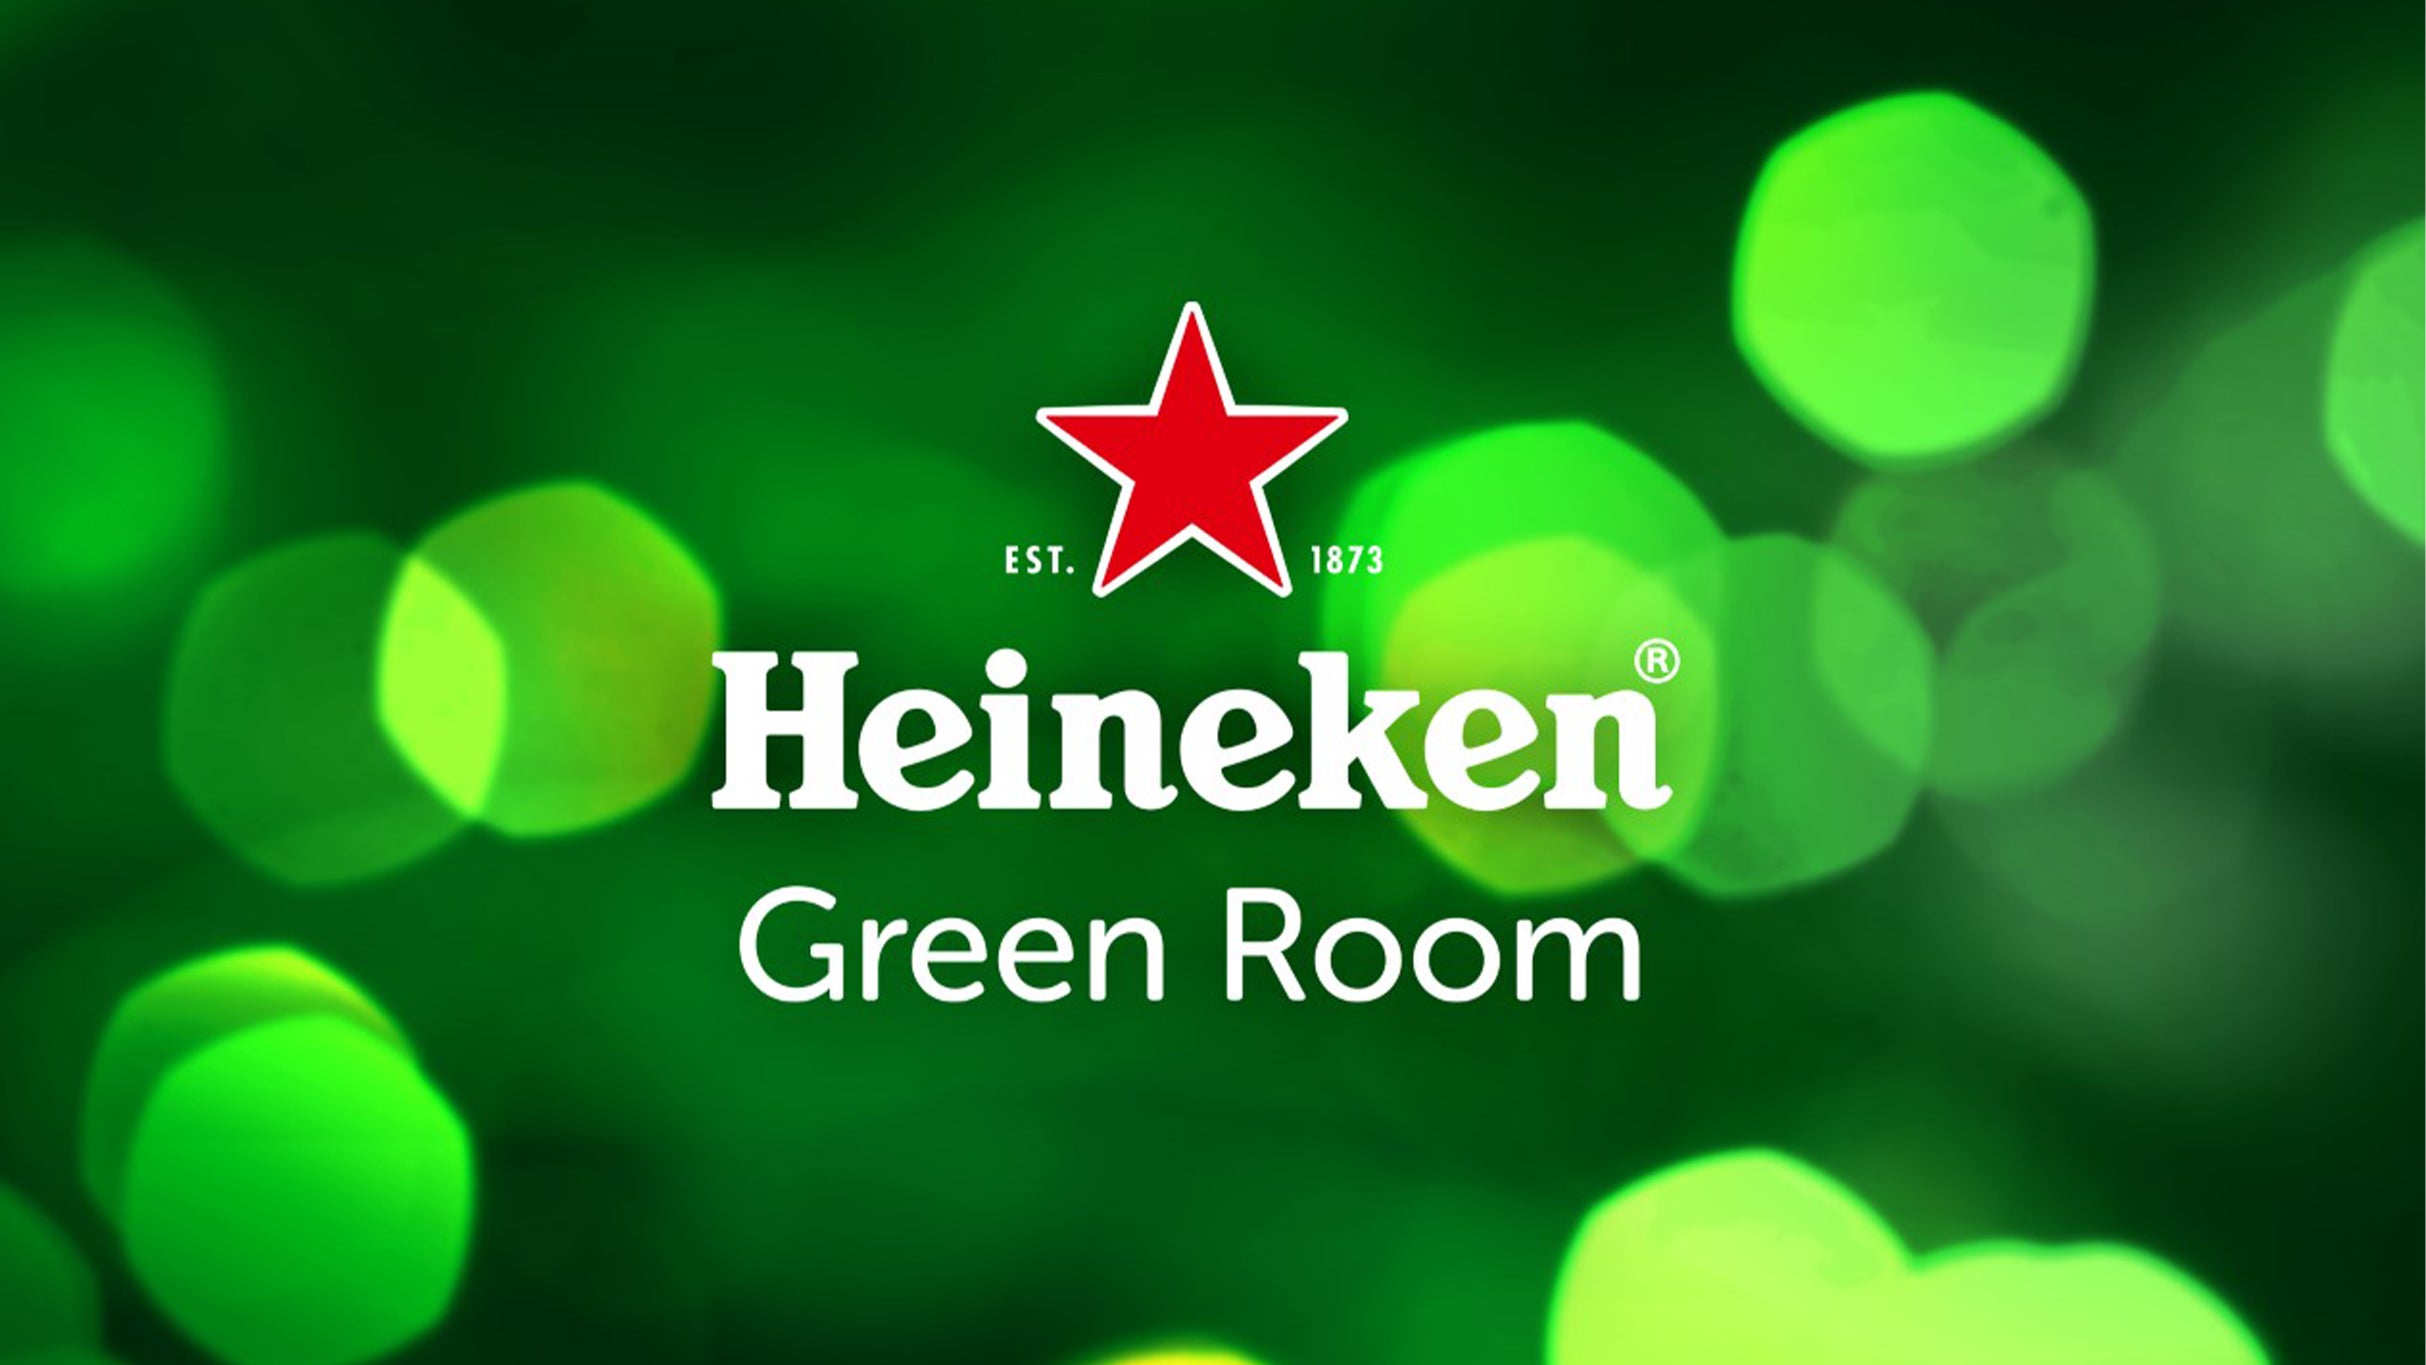 Heineken Green Room - Shane Todd Event Title Pic